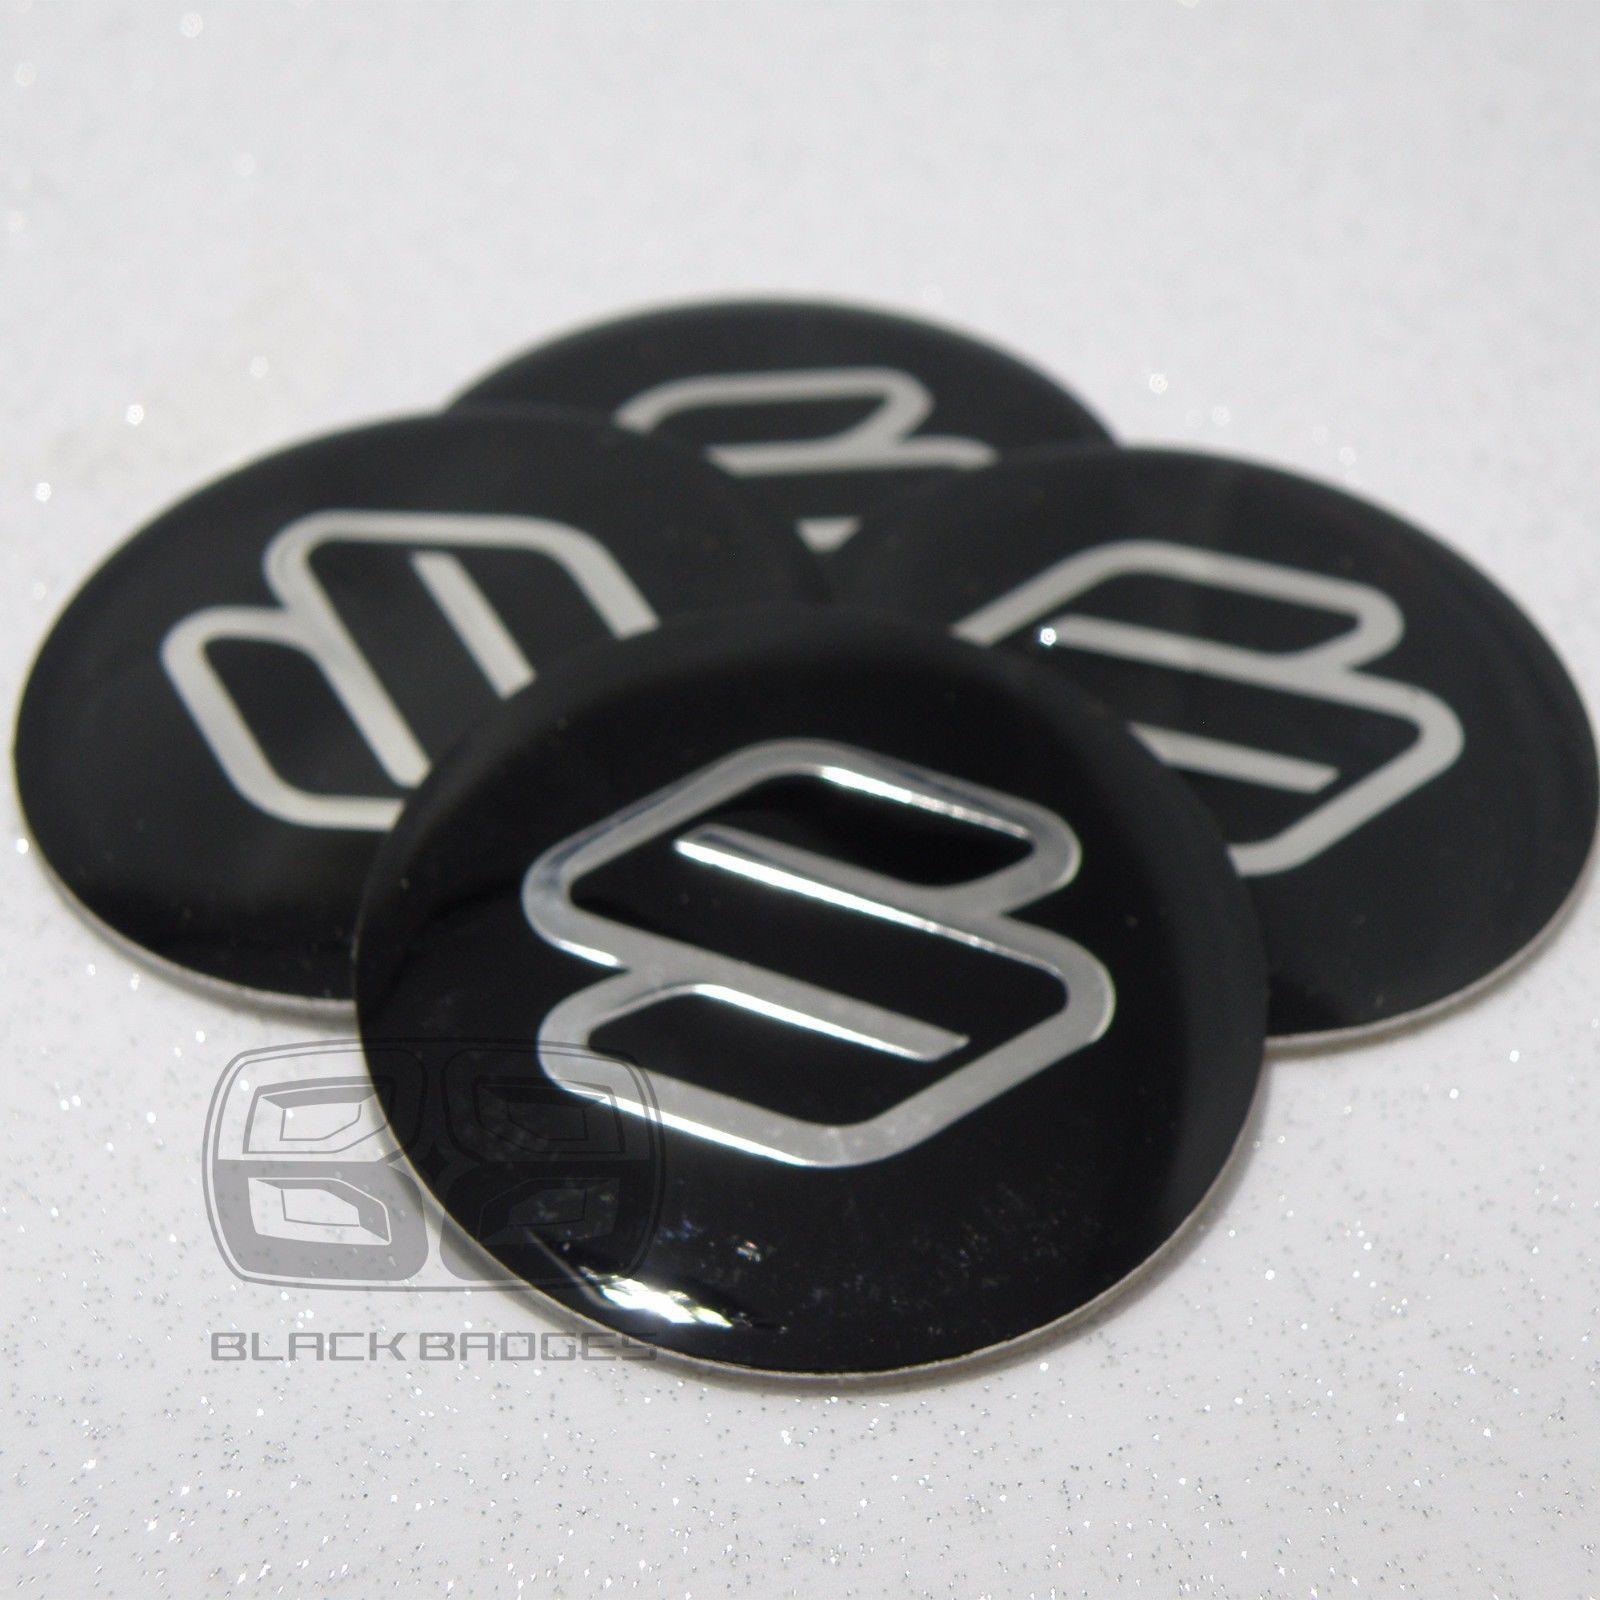 Black and Silver Logo - 50mm SUZUKI ALLOY WHEEL CENTRE CAP BADGES CAPS 50 mm 5CM BLACK SILVER LOGO